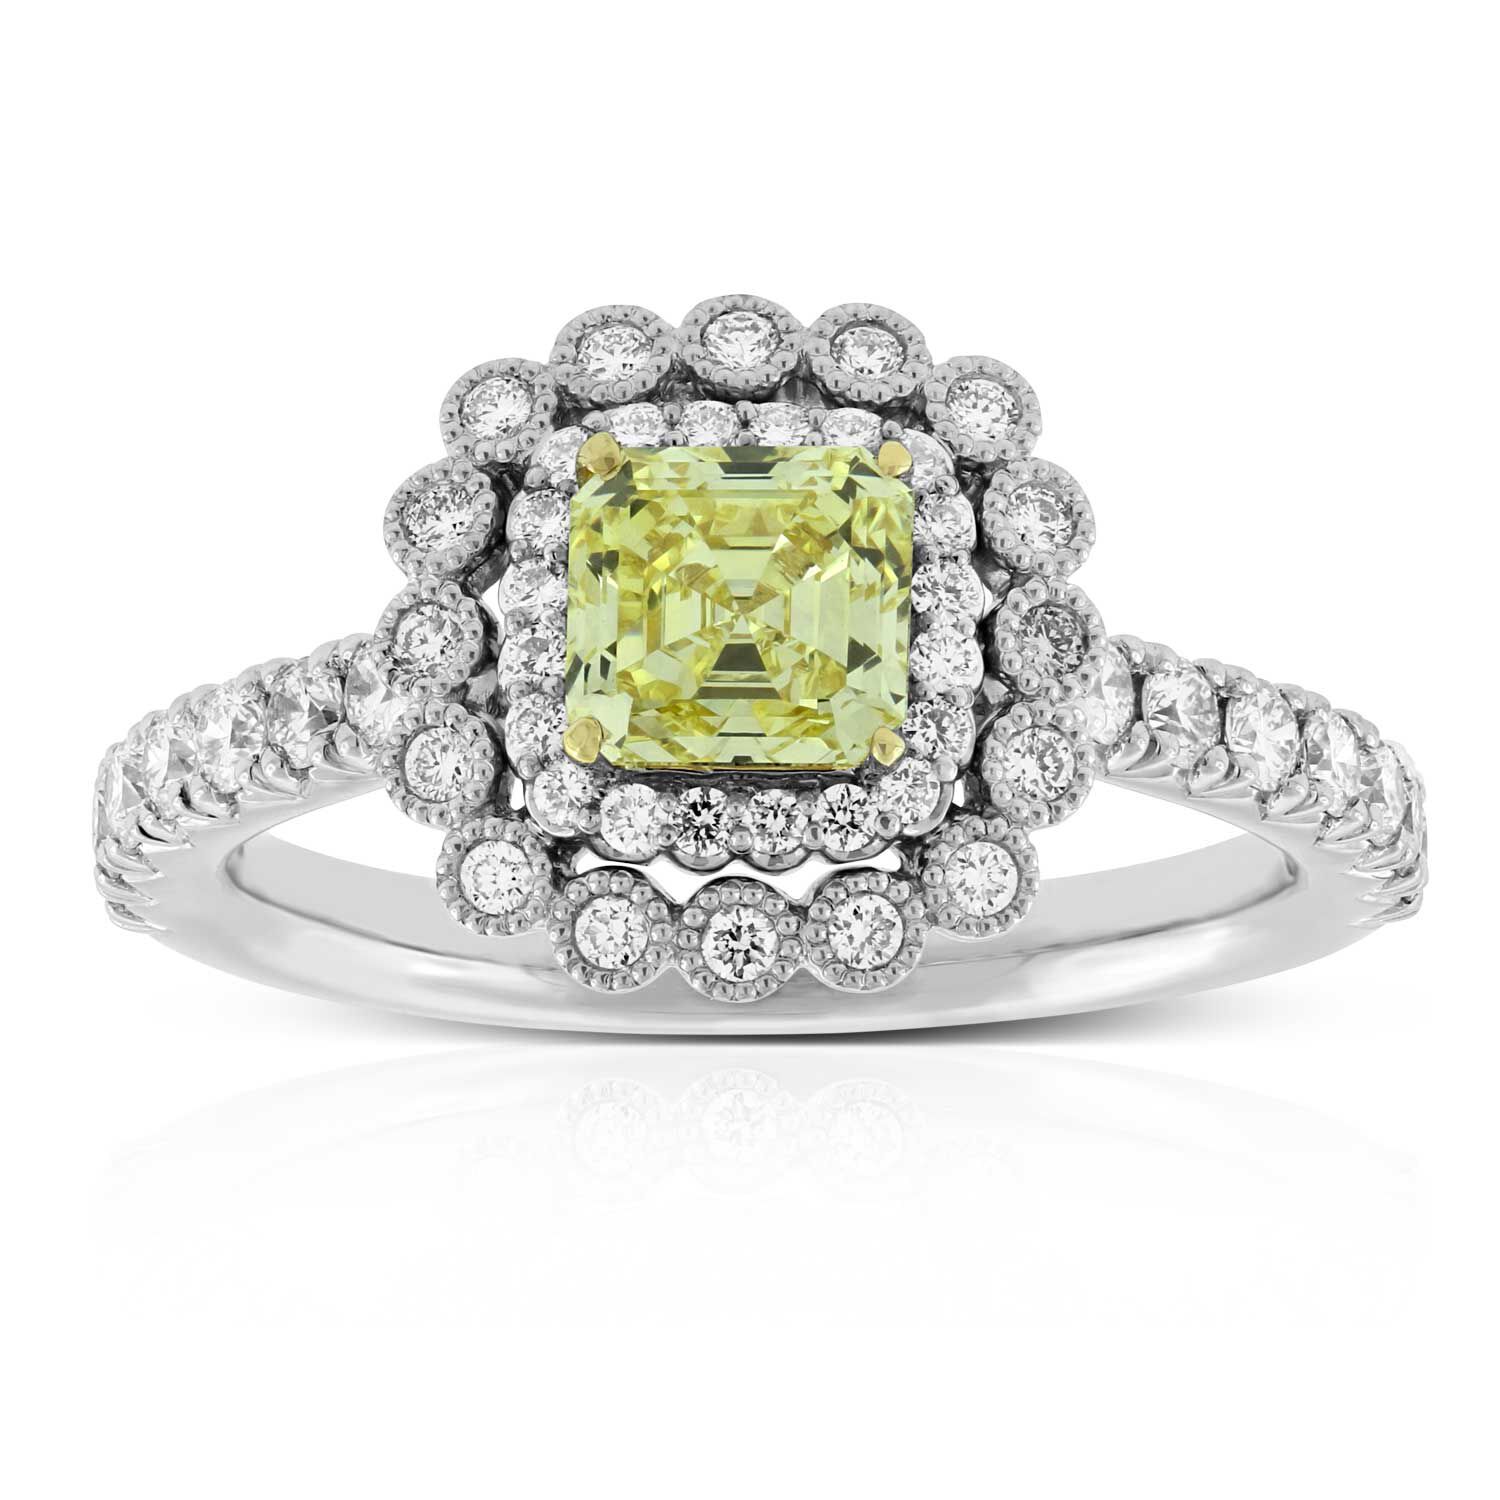 Fancy Intense Yellow Diamond Engagement Ring 18K, 9/10 ct. Center